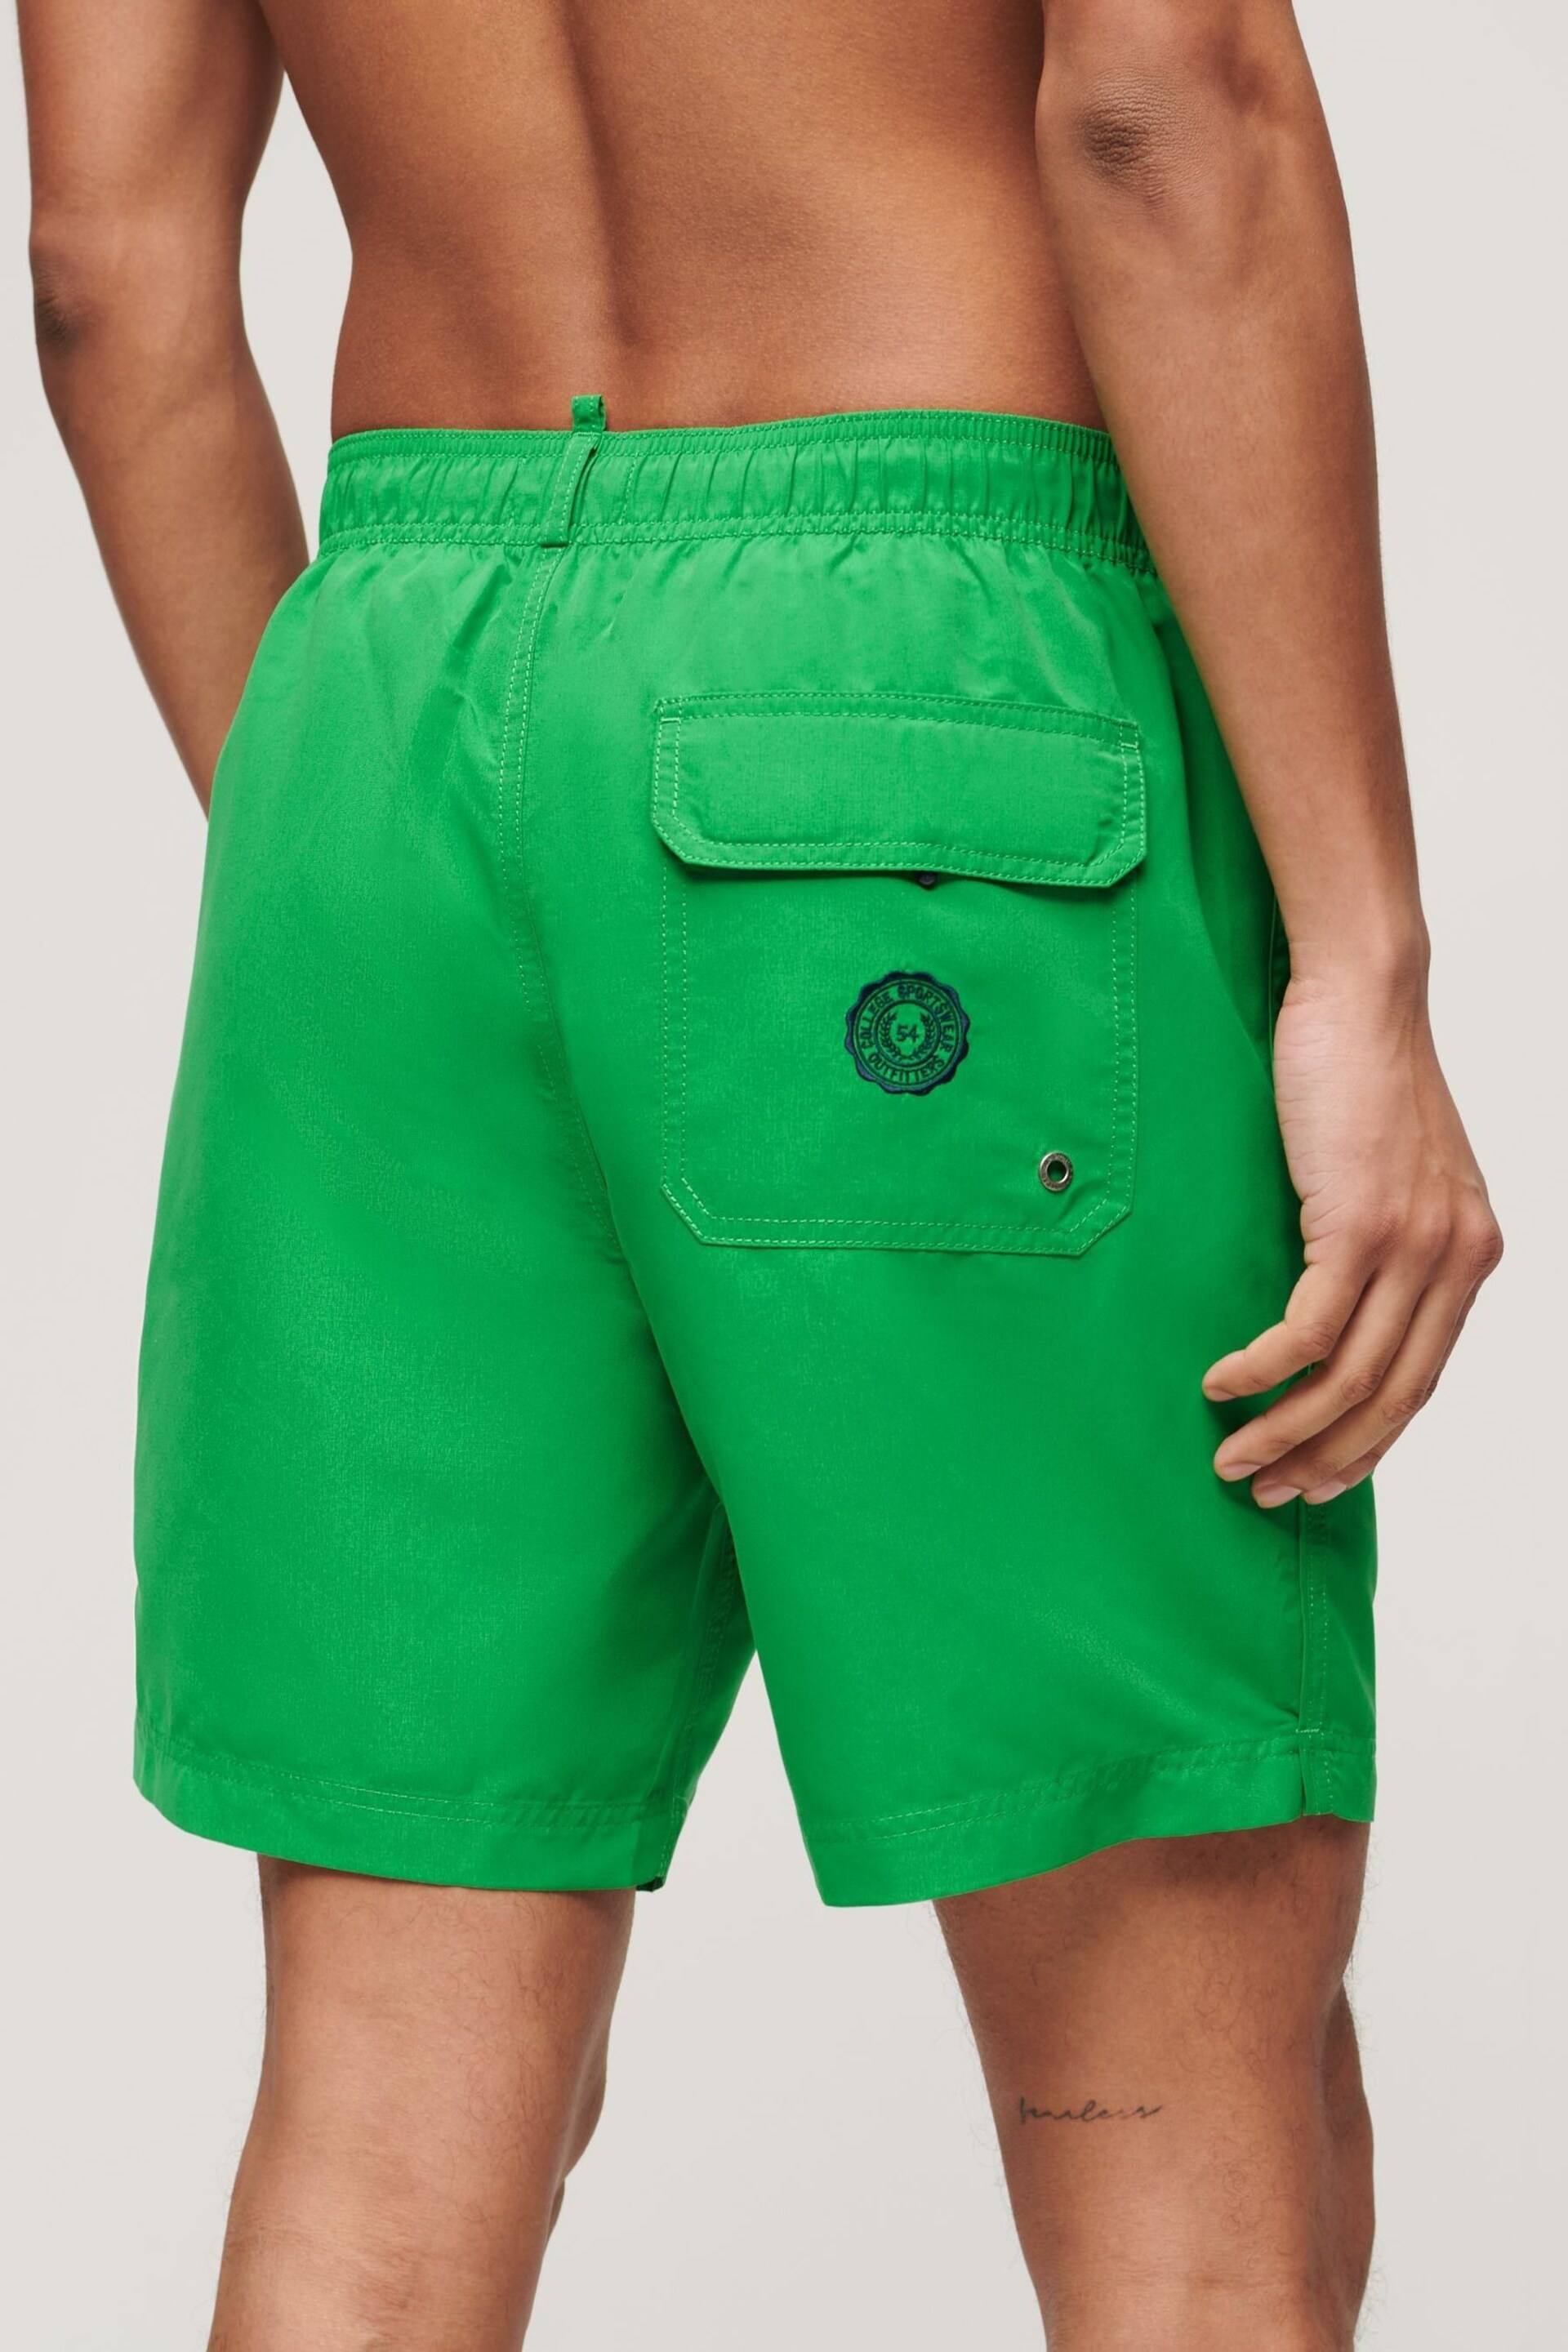 Superdry Green Vintage Polo Shirt 17" Swim Shorts - Image 4 of 7